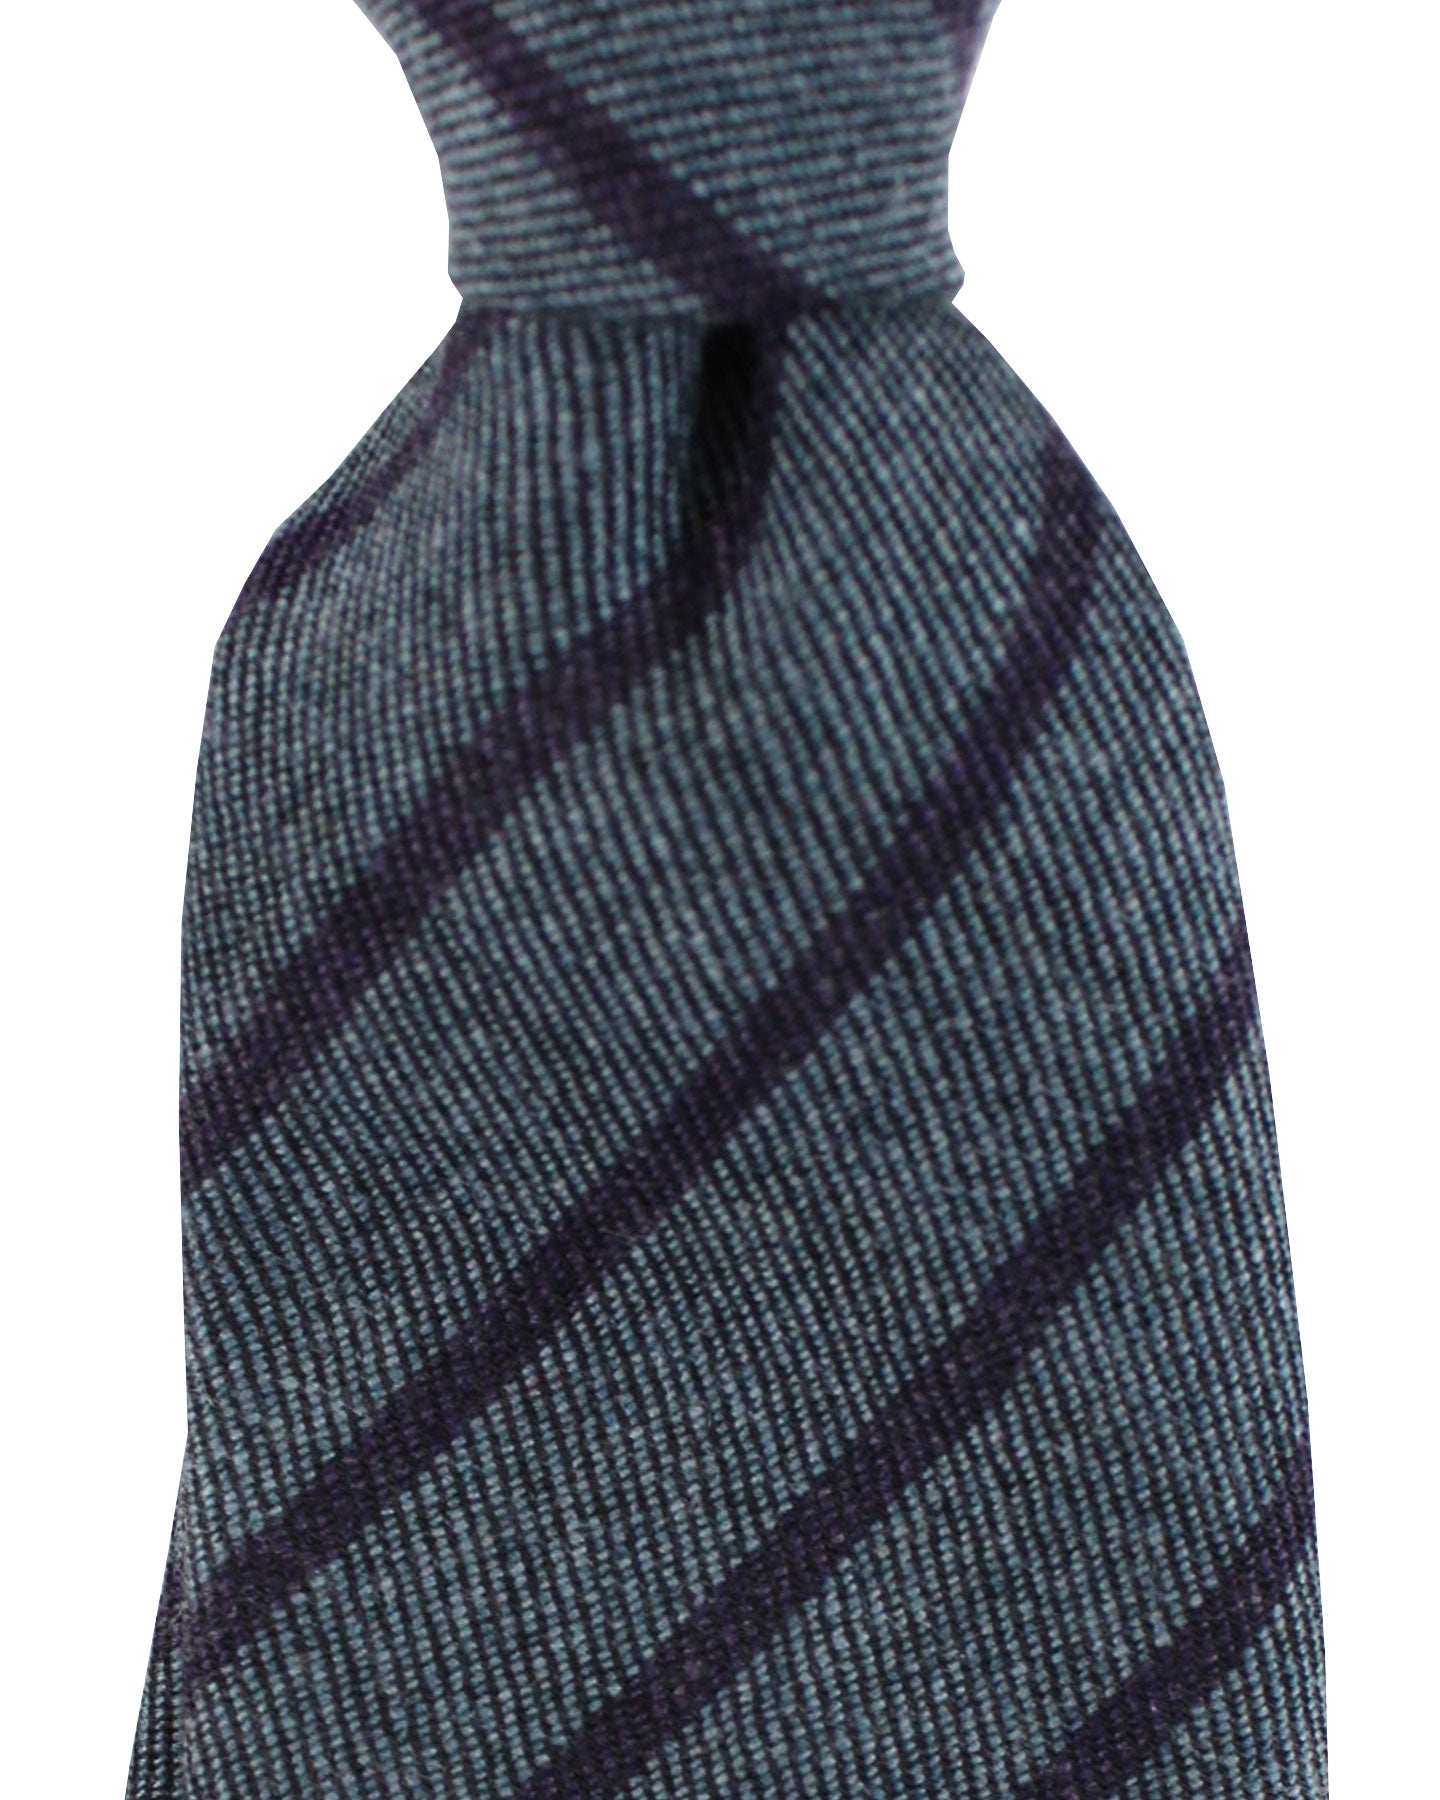 Kiton Sevenfold Tie Gray Purple Stripes